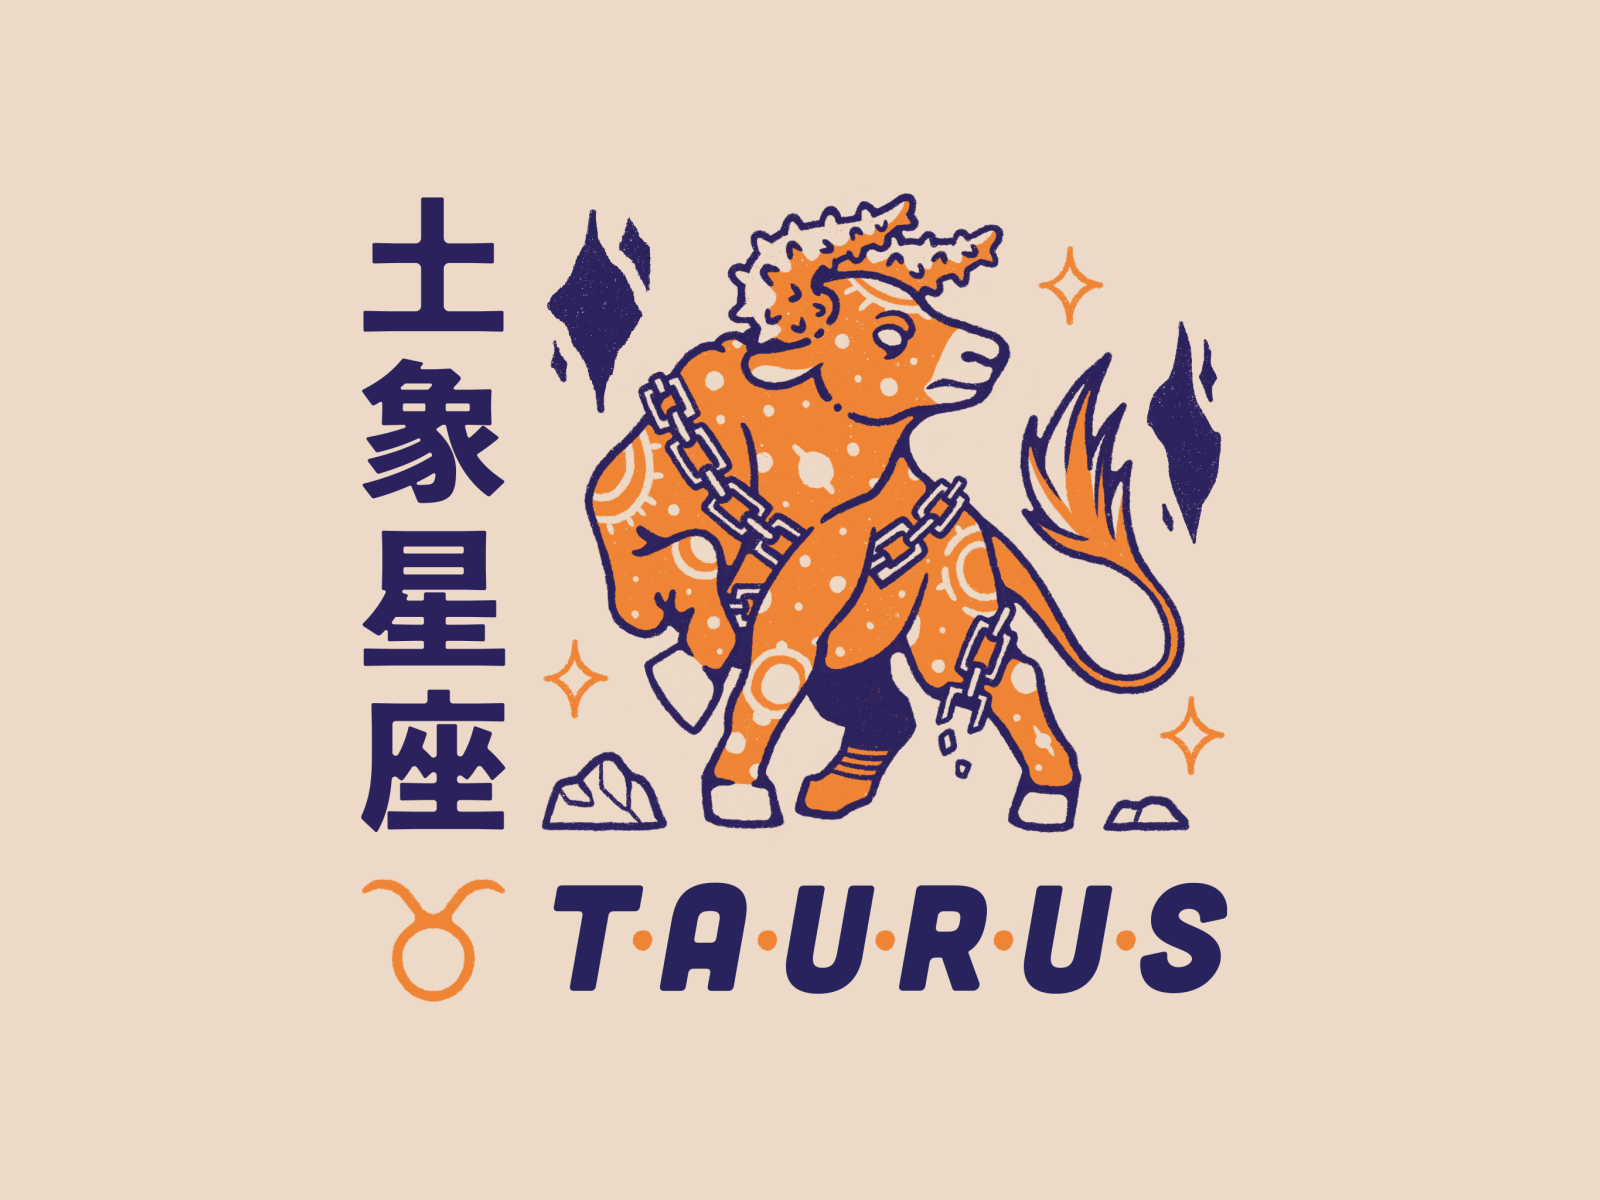 Horoscope Series 4 Taurus by JoJo Lee on Dribbble